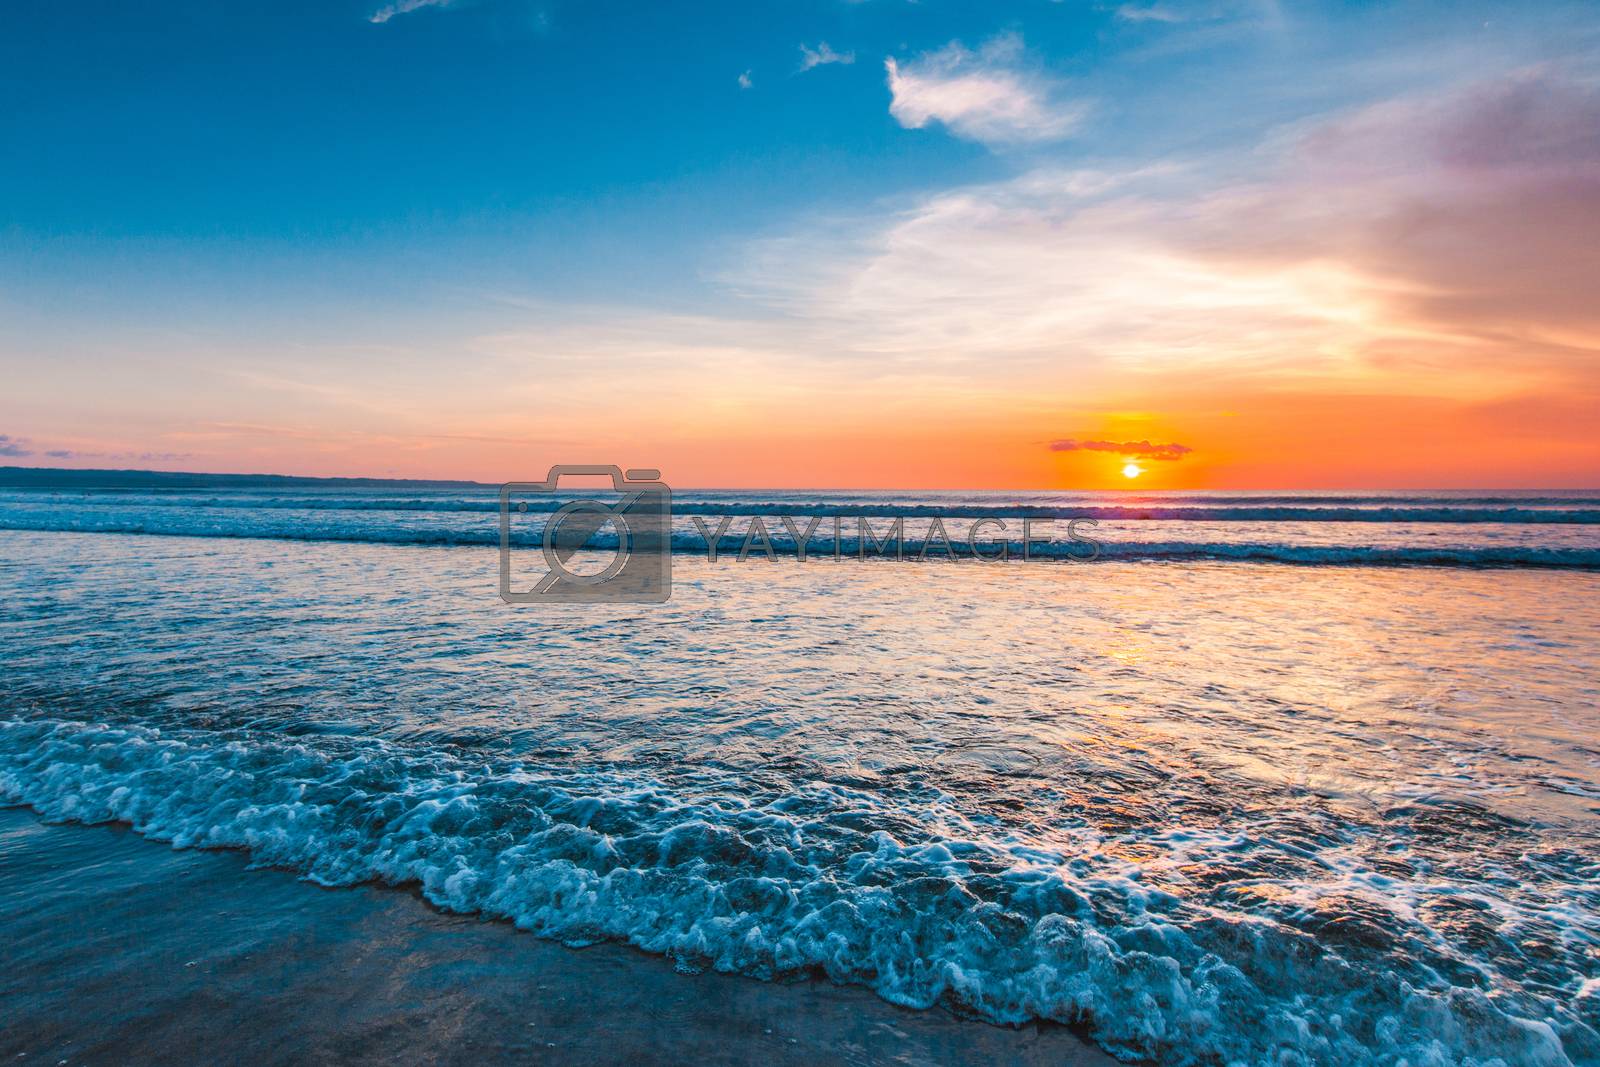 Royalty free image of Amazing sunset from Bali beach by Yellowj